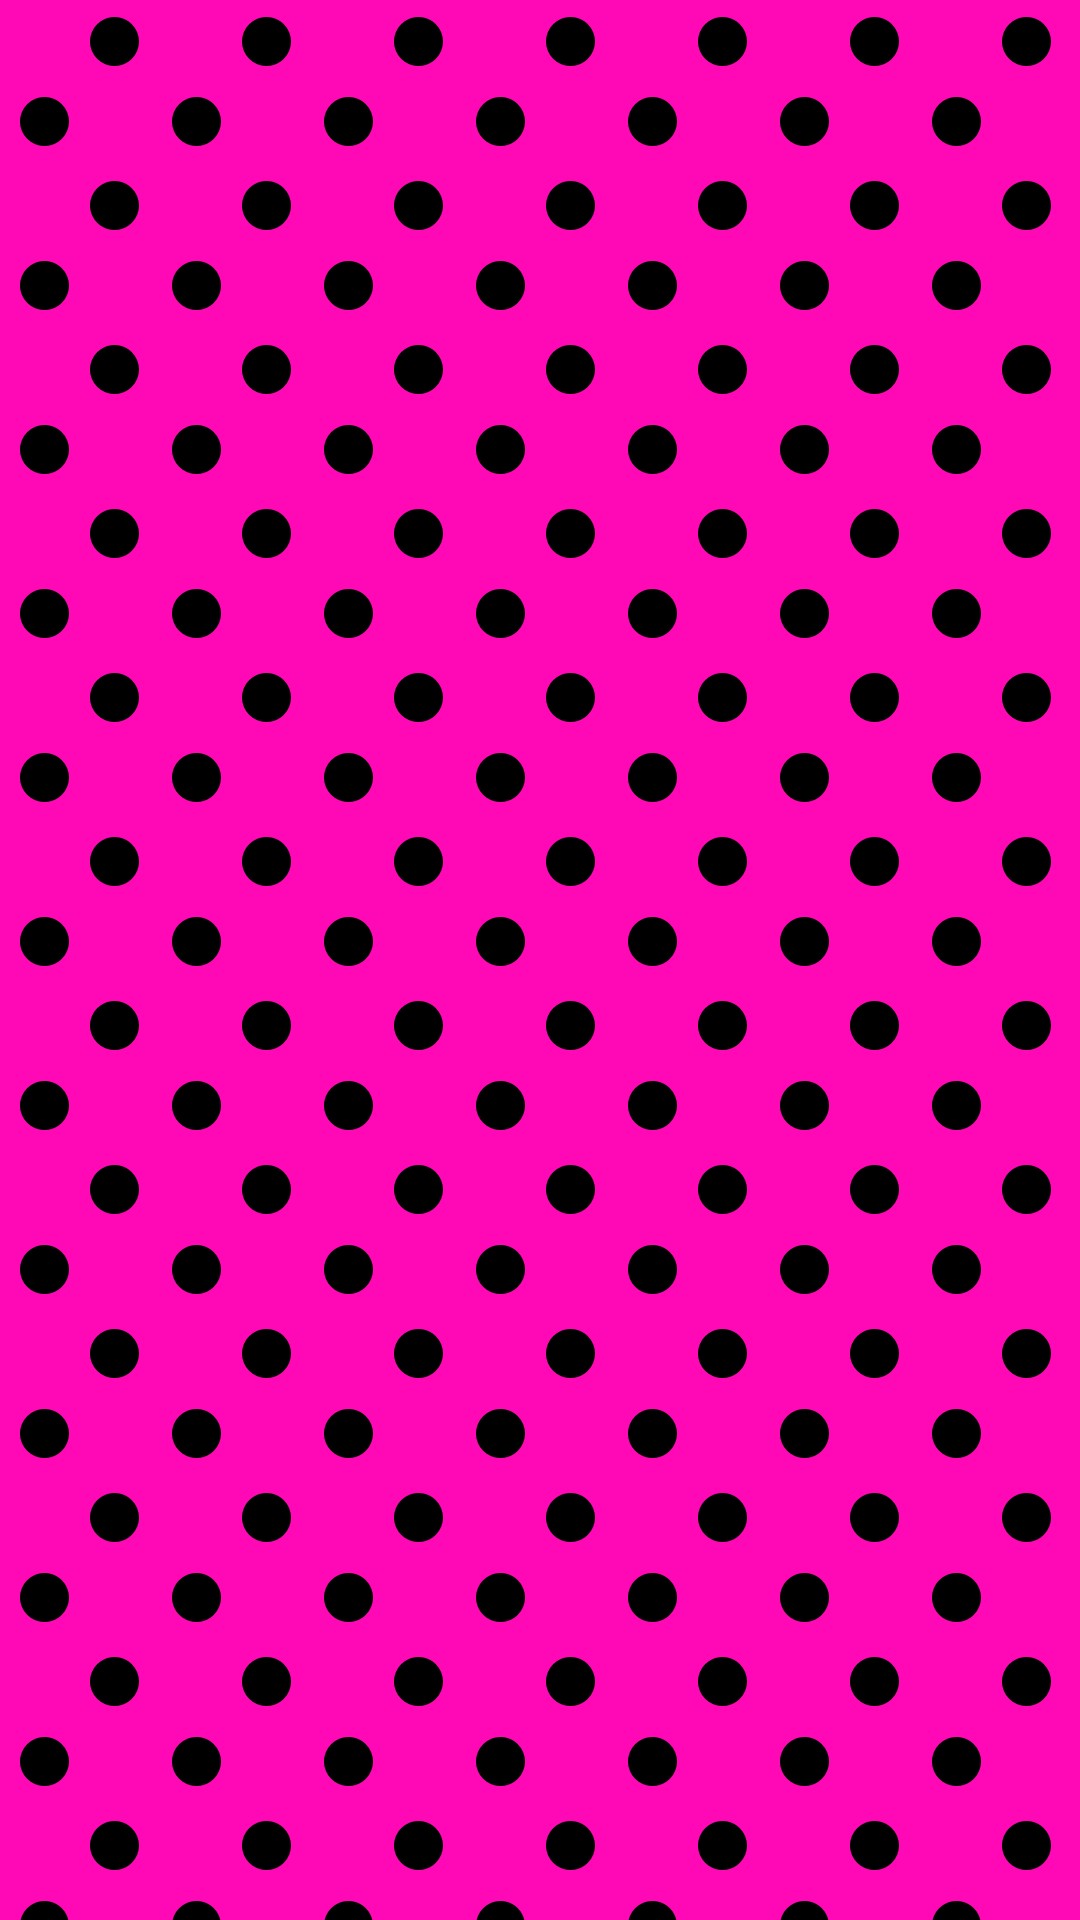 Polkadot Pink iPhone Wallpaper resolution 1080x1920